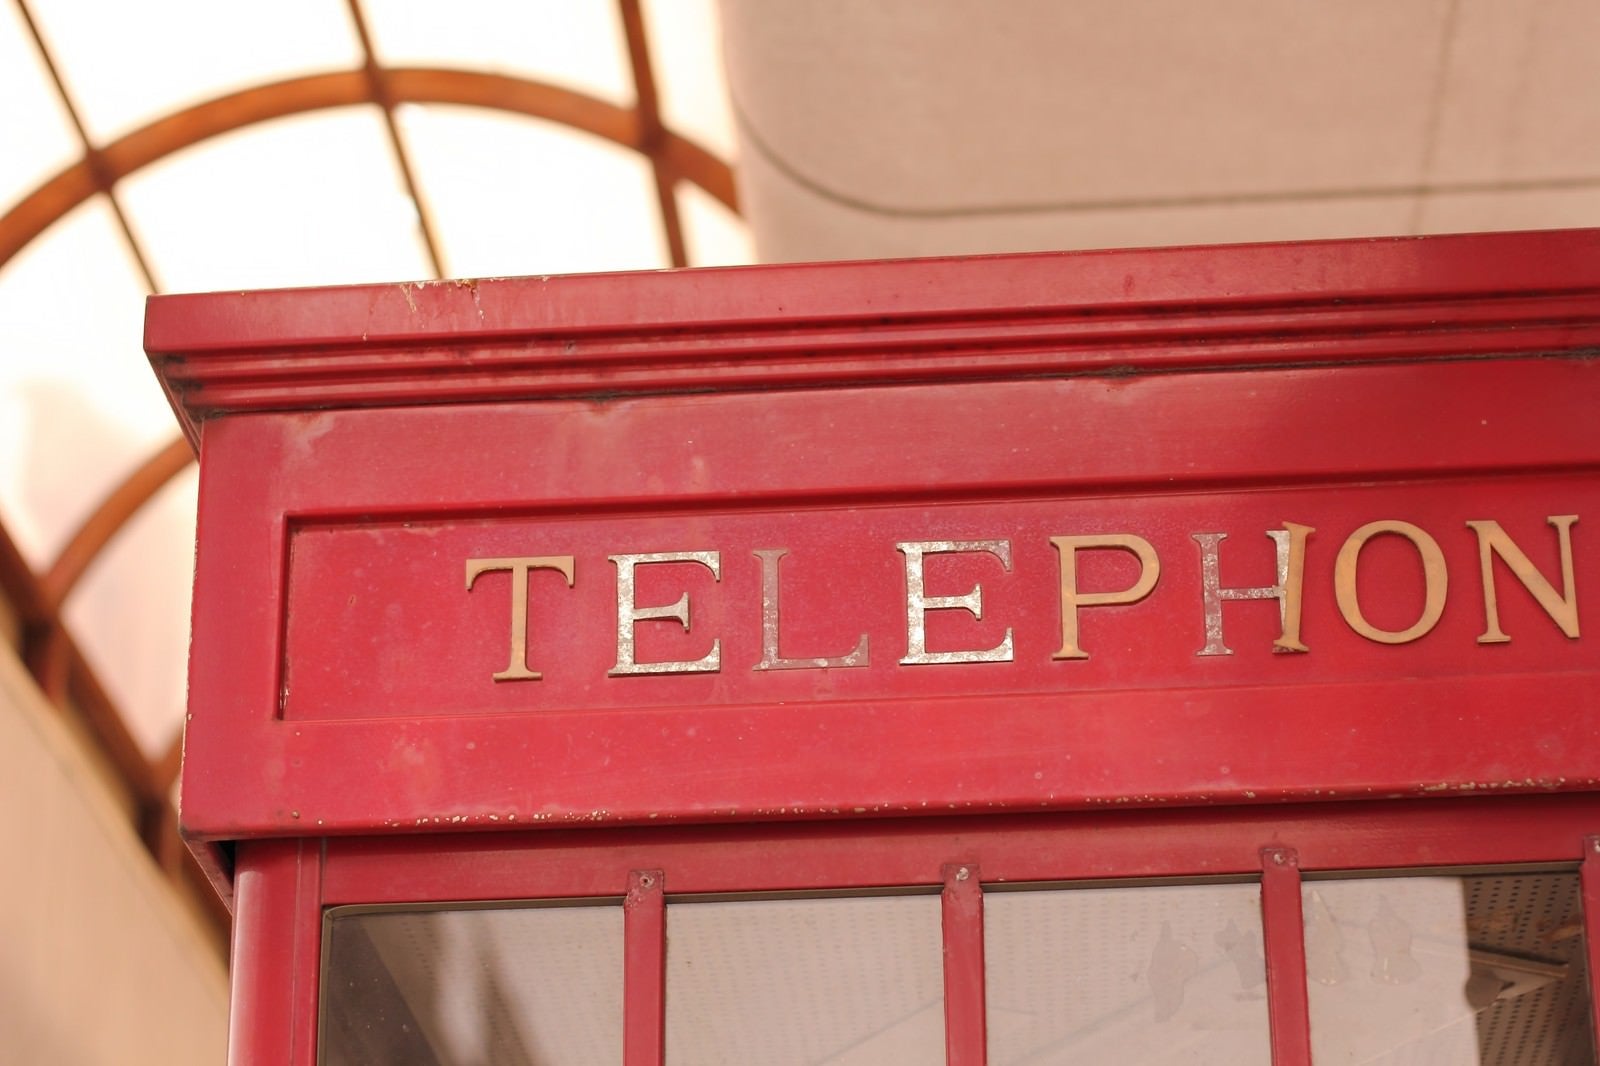 「「TELEPHONE」と書かれた電話ボックス」の写真